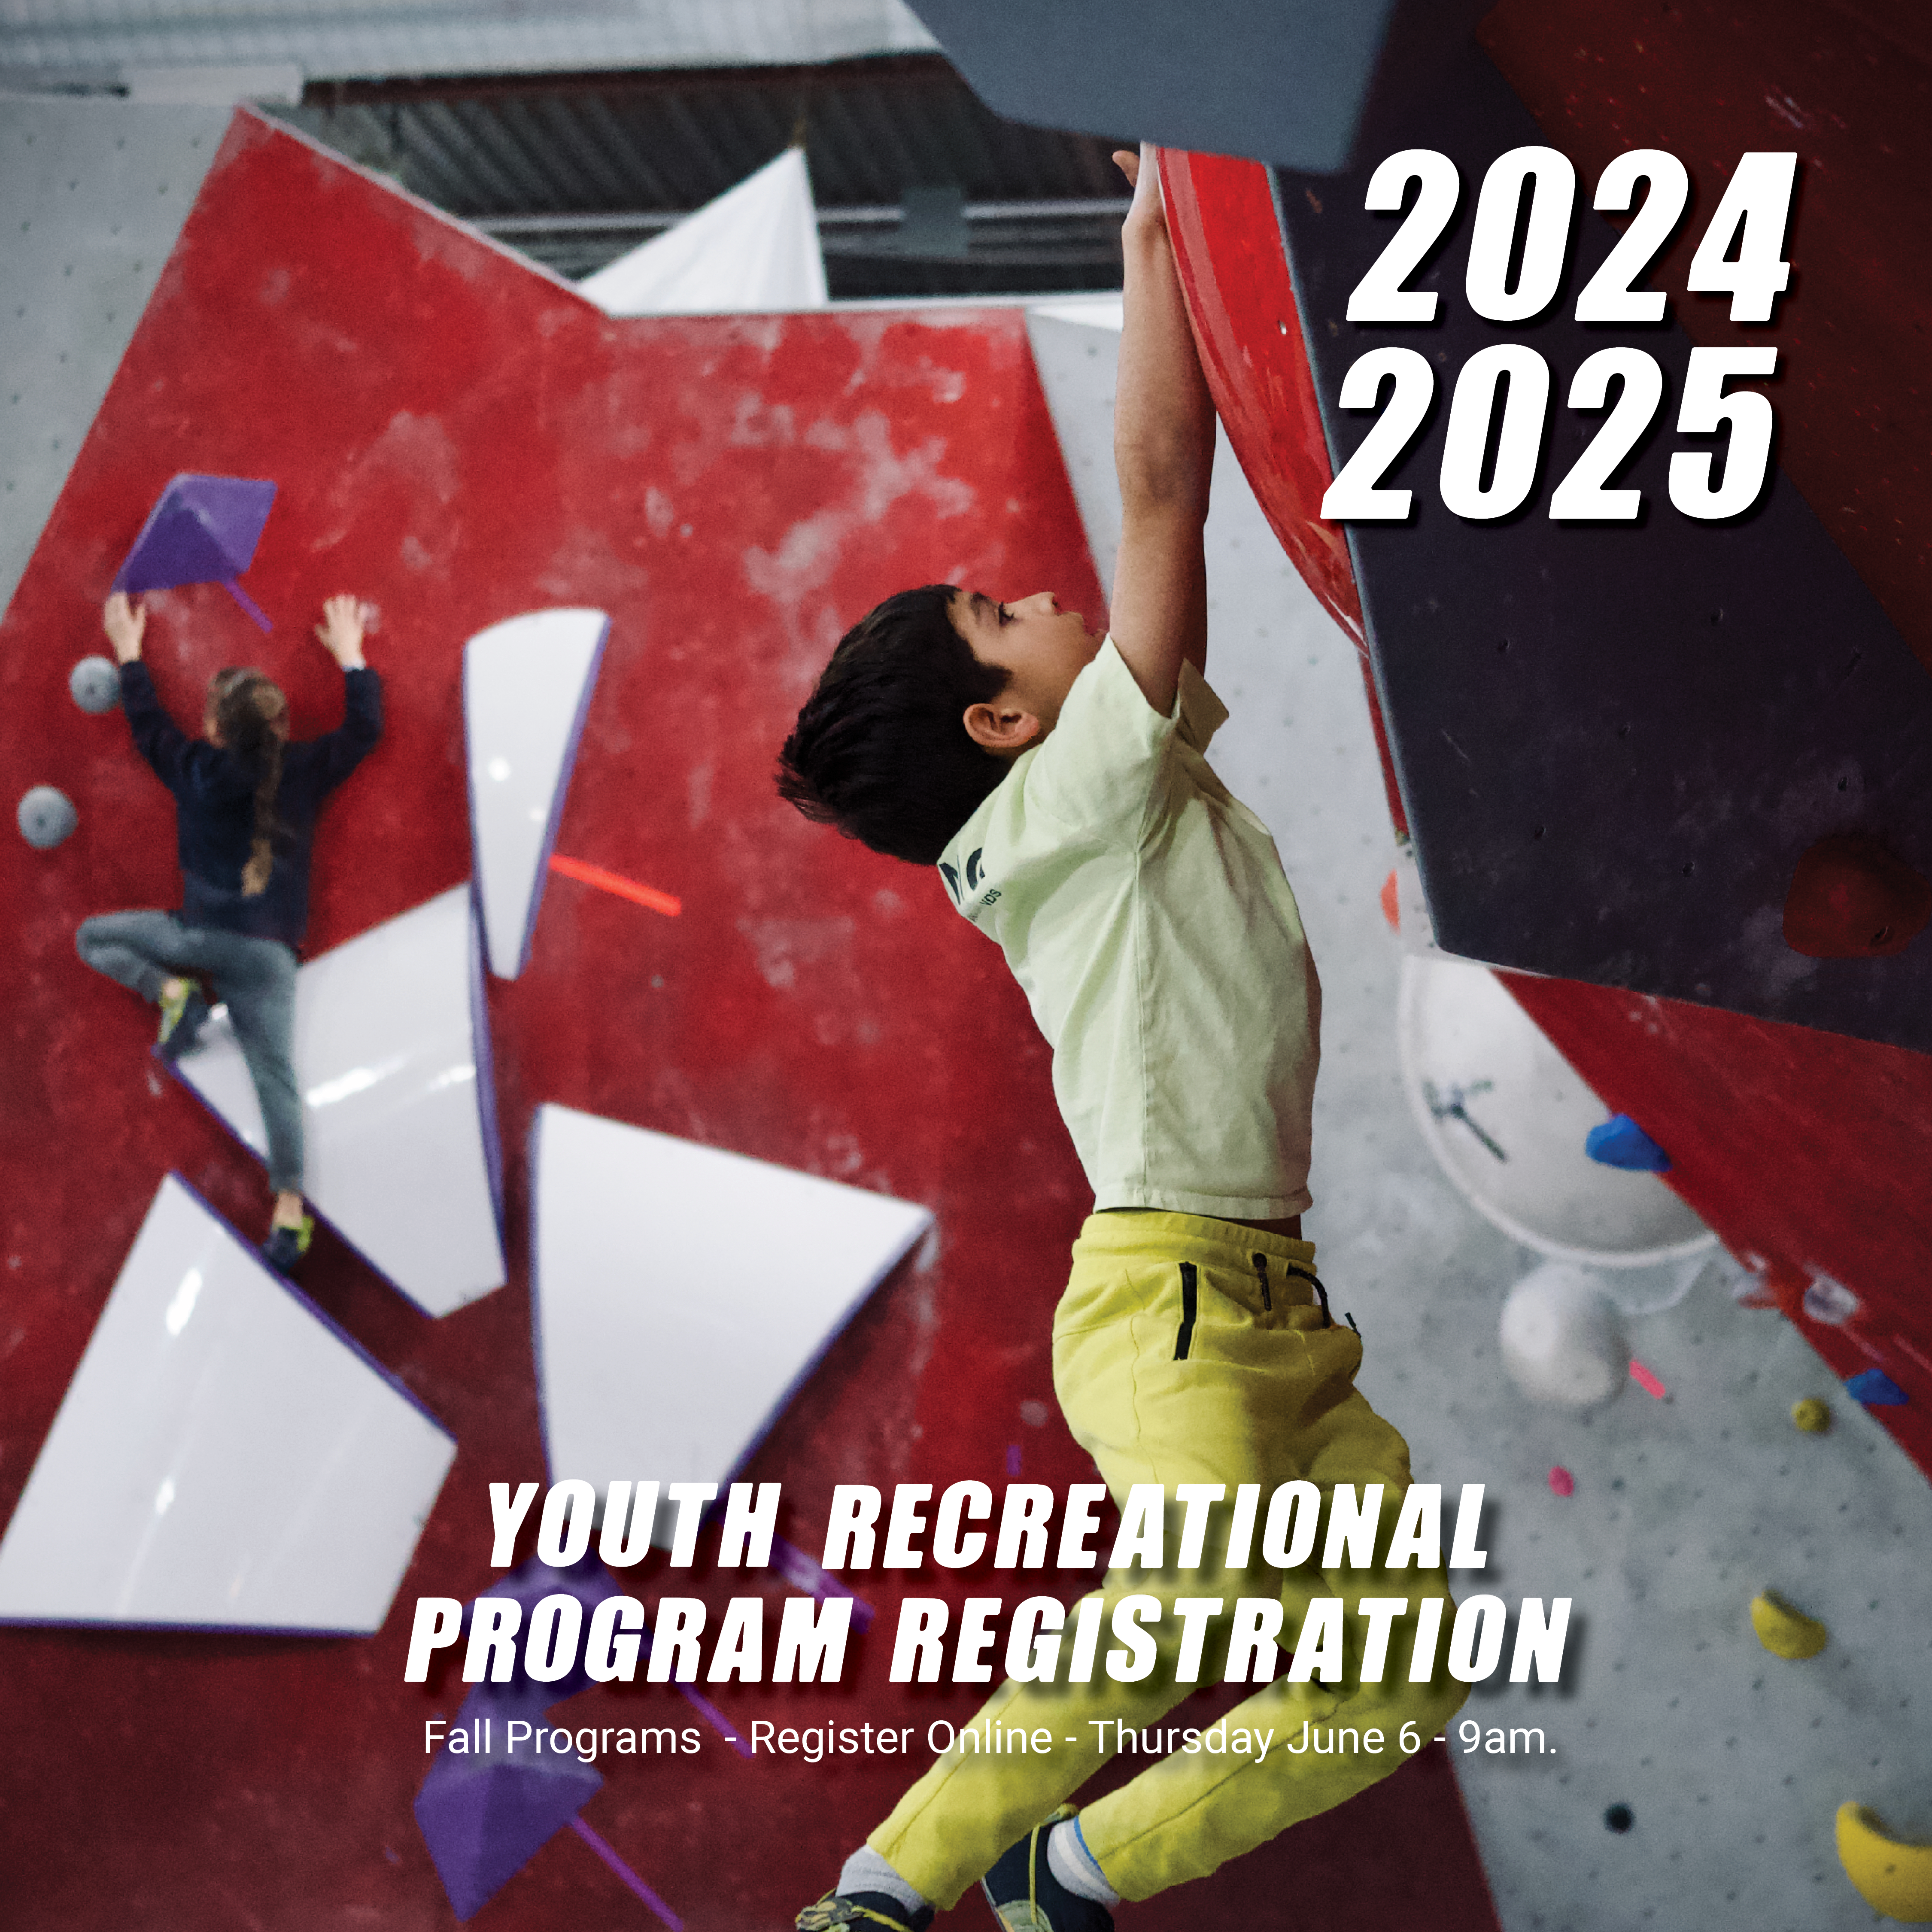 Youth Rec Program Fall 2024 Registration Dates